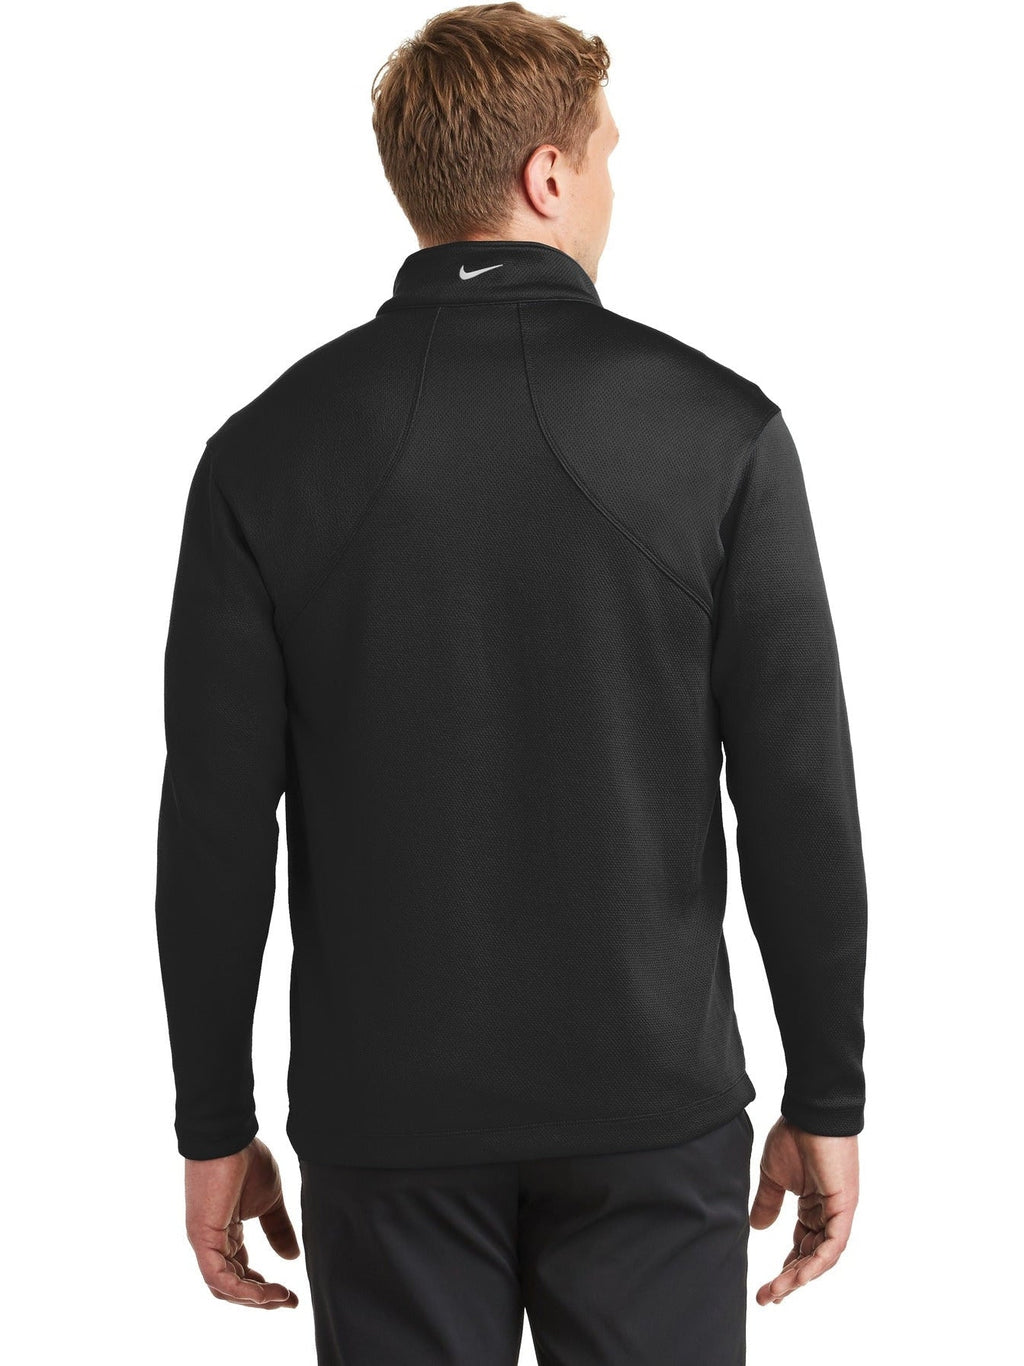 Nike Golf Pullover Mens Large Black Long Sleeve 1/4 Zip Pullover 400099-010